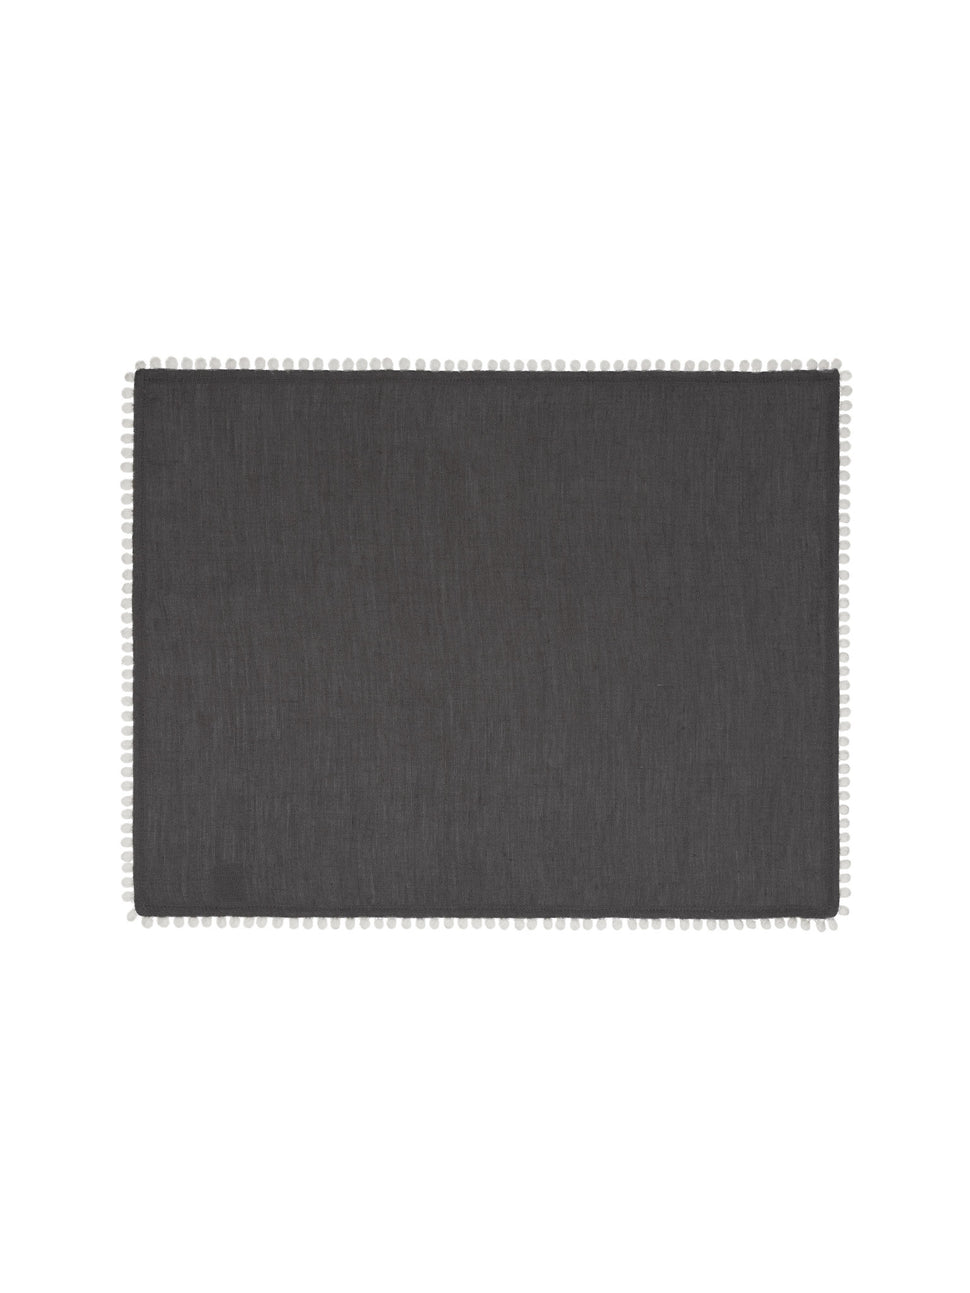 Charcoal Grey Linen Bobble Placemats